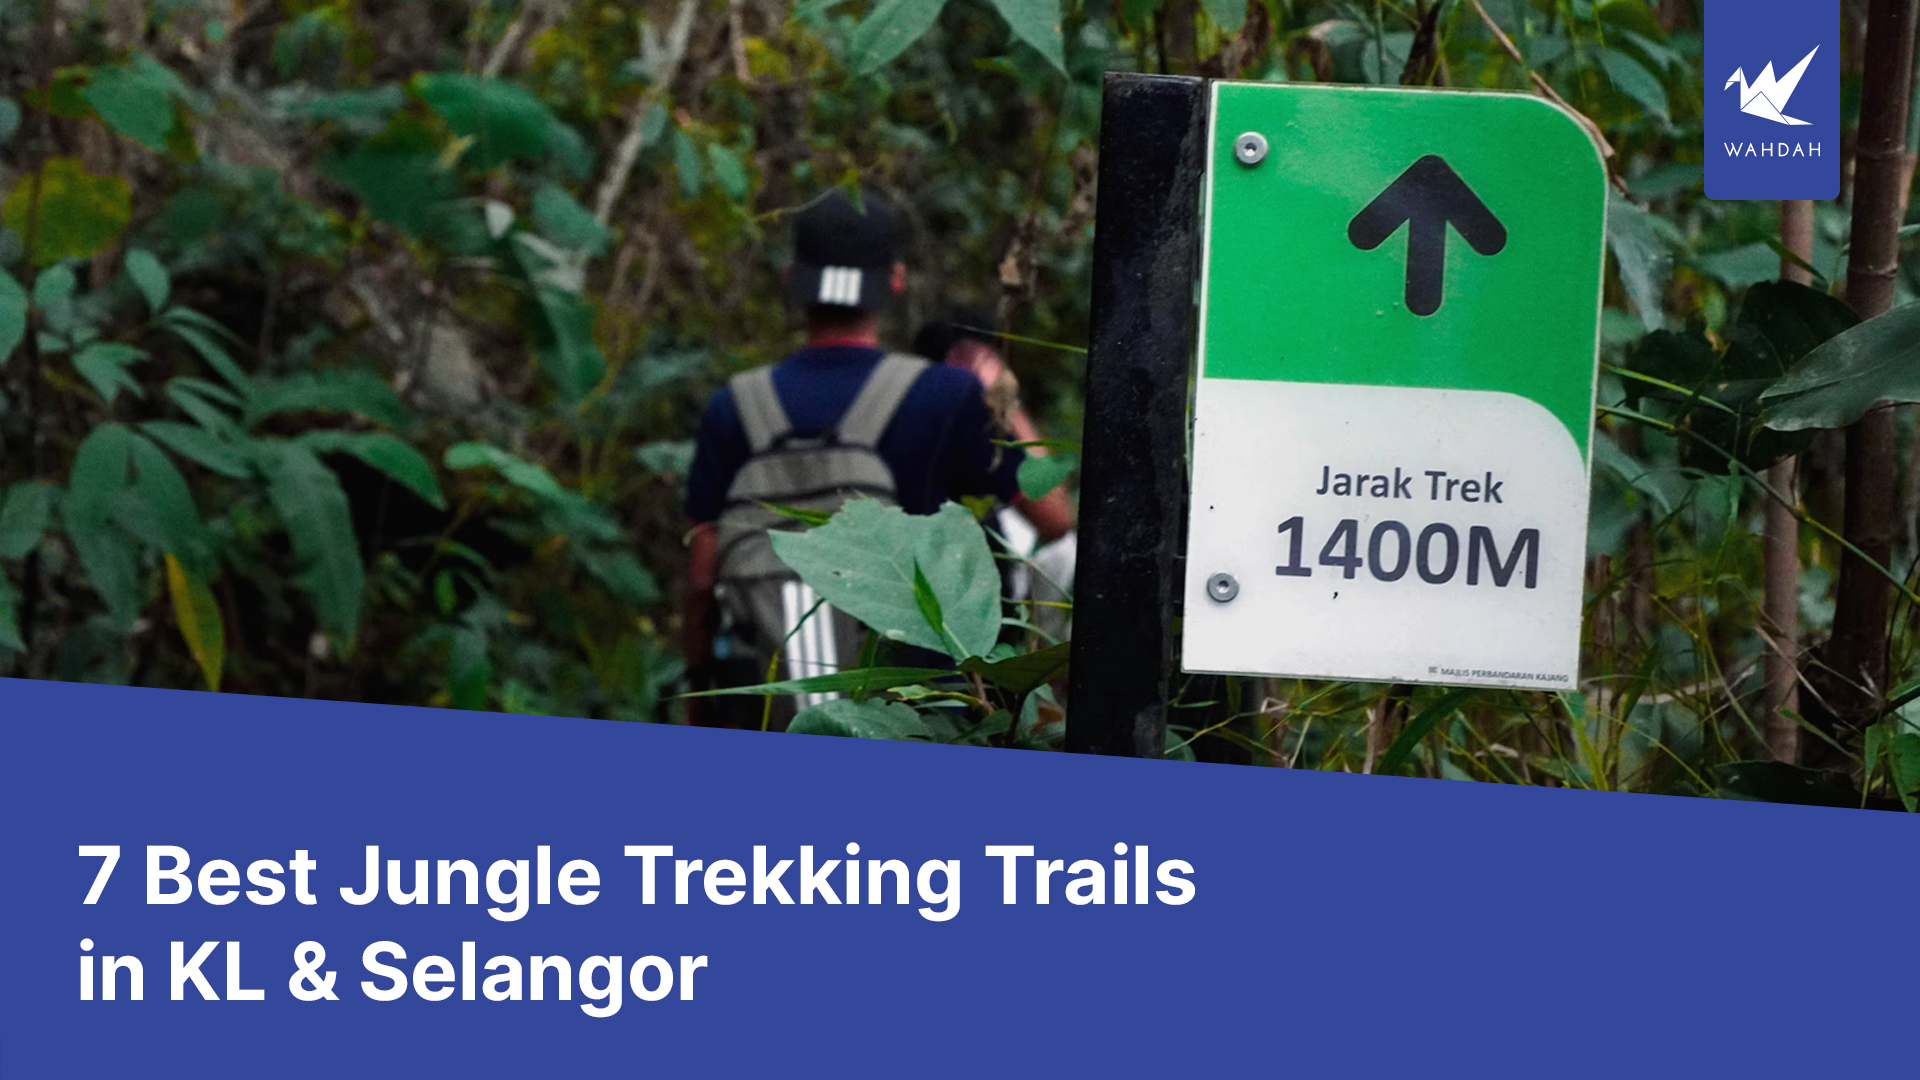 7 Best Jungle Trekking Trails in KL & Selangor